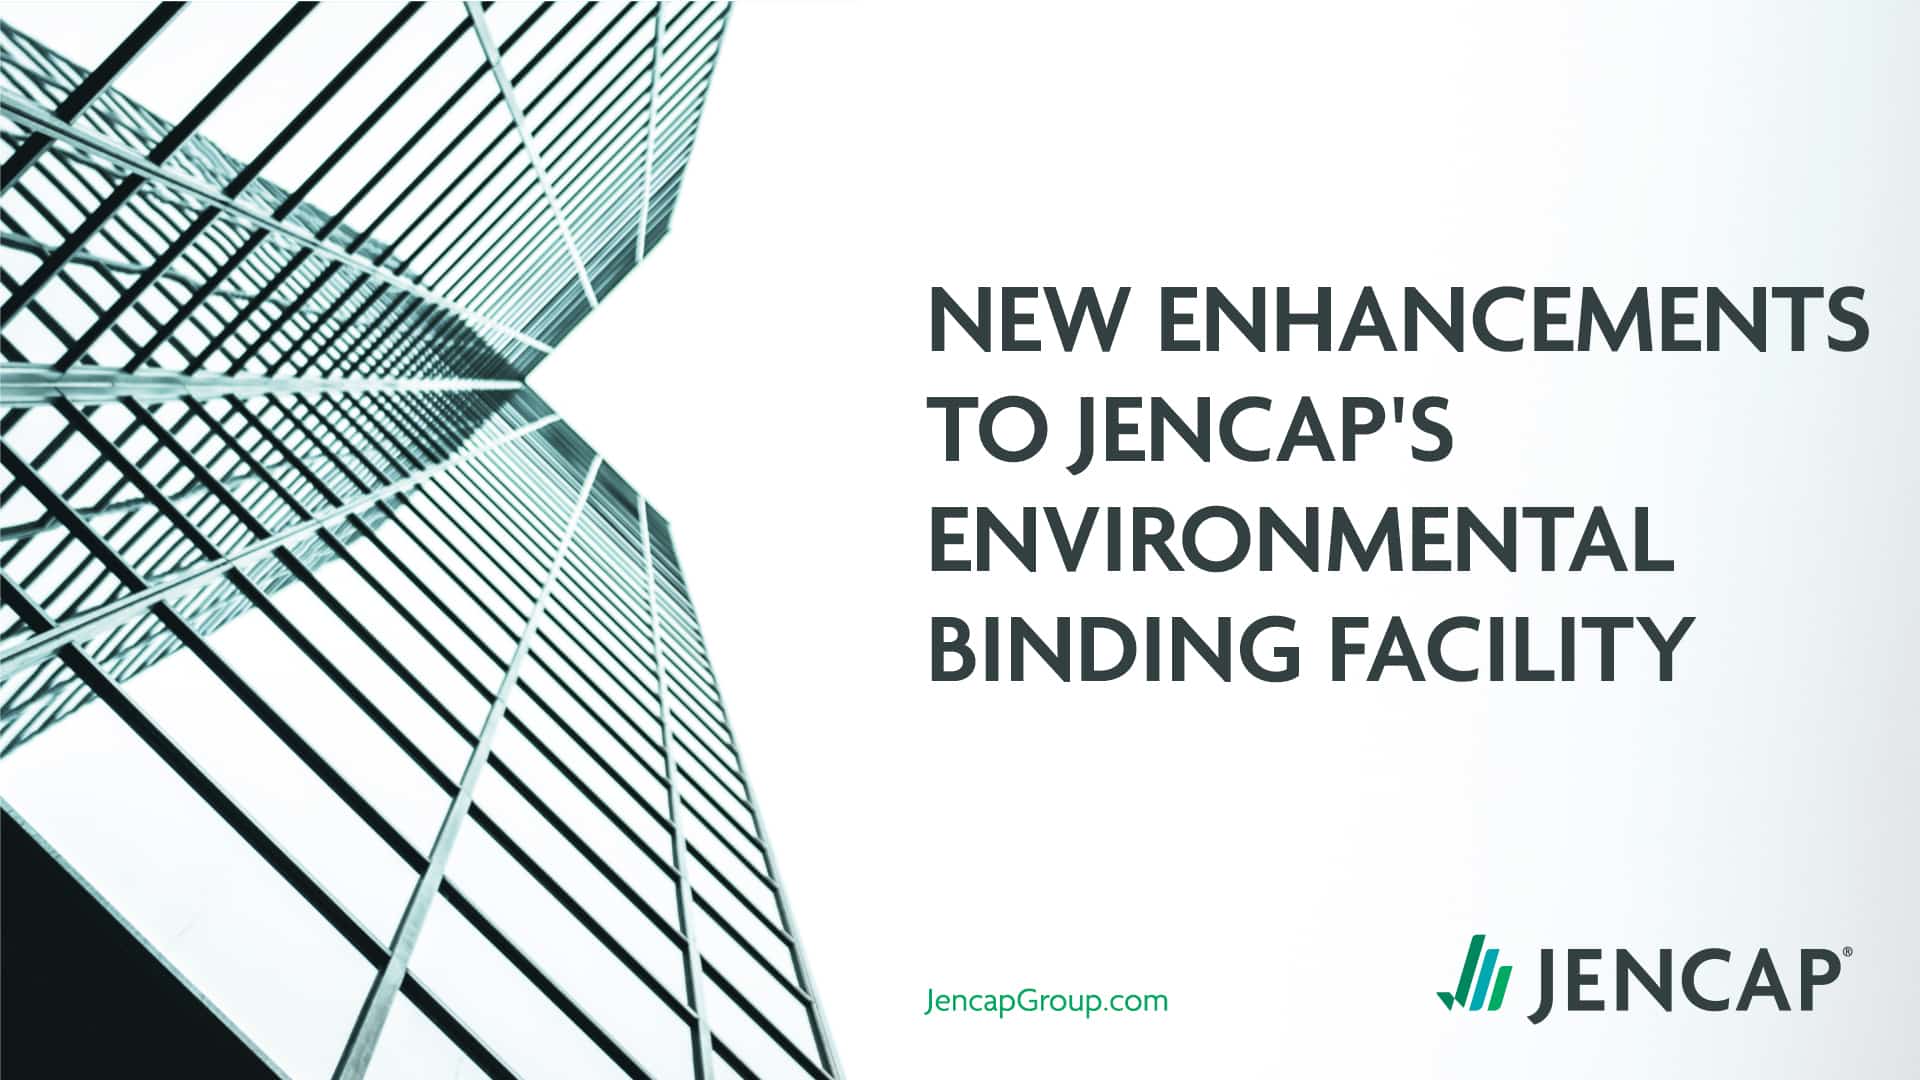 New Enhancements to Jencap's Environmental Binding Facility